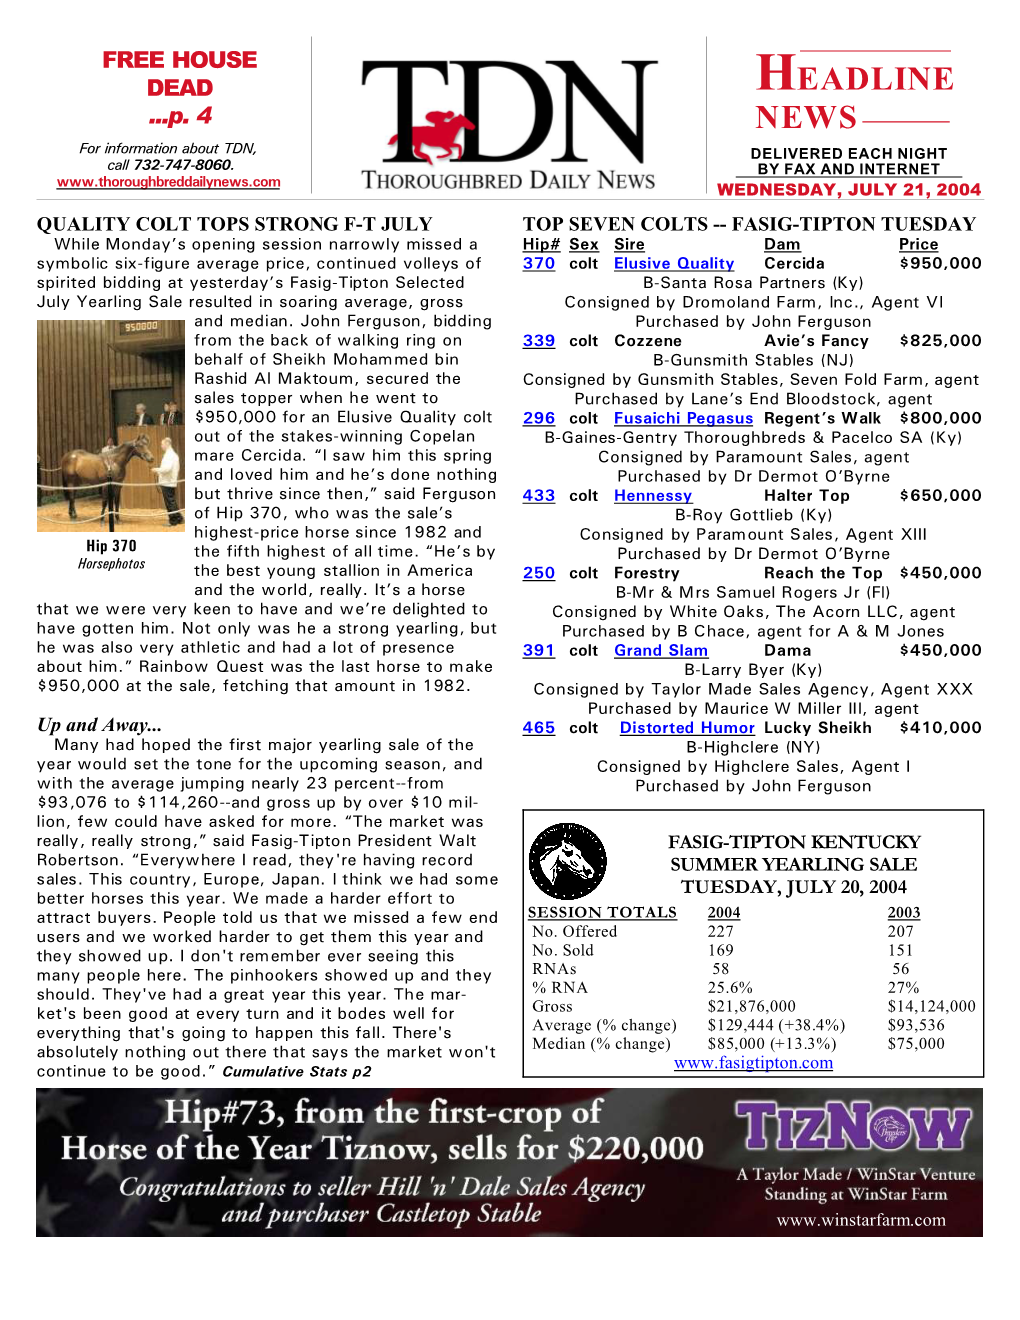 HEADLINE NEWS • 7/21/04 • PAGE 2 of 7